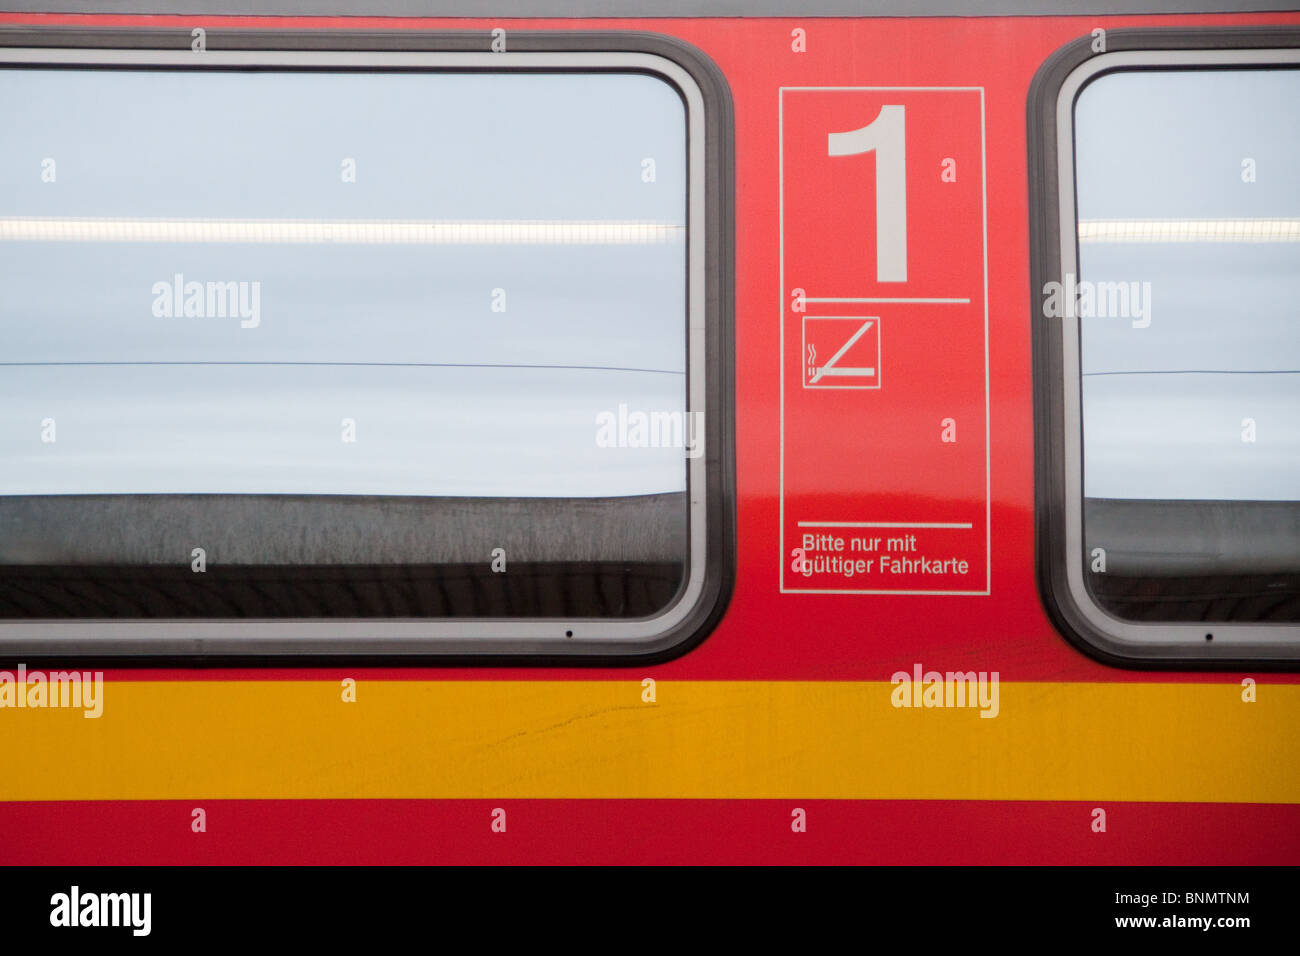 German Deutsche Bahn First Class rail carriage Stock Photo